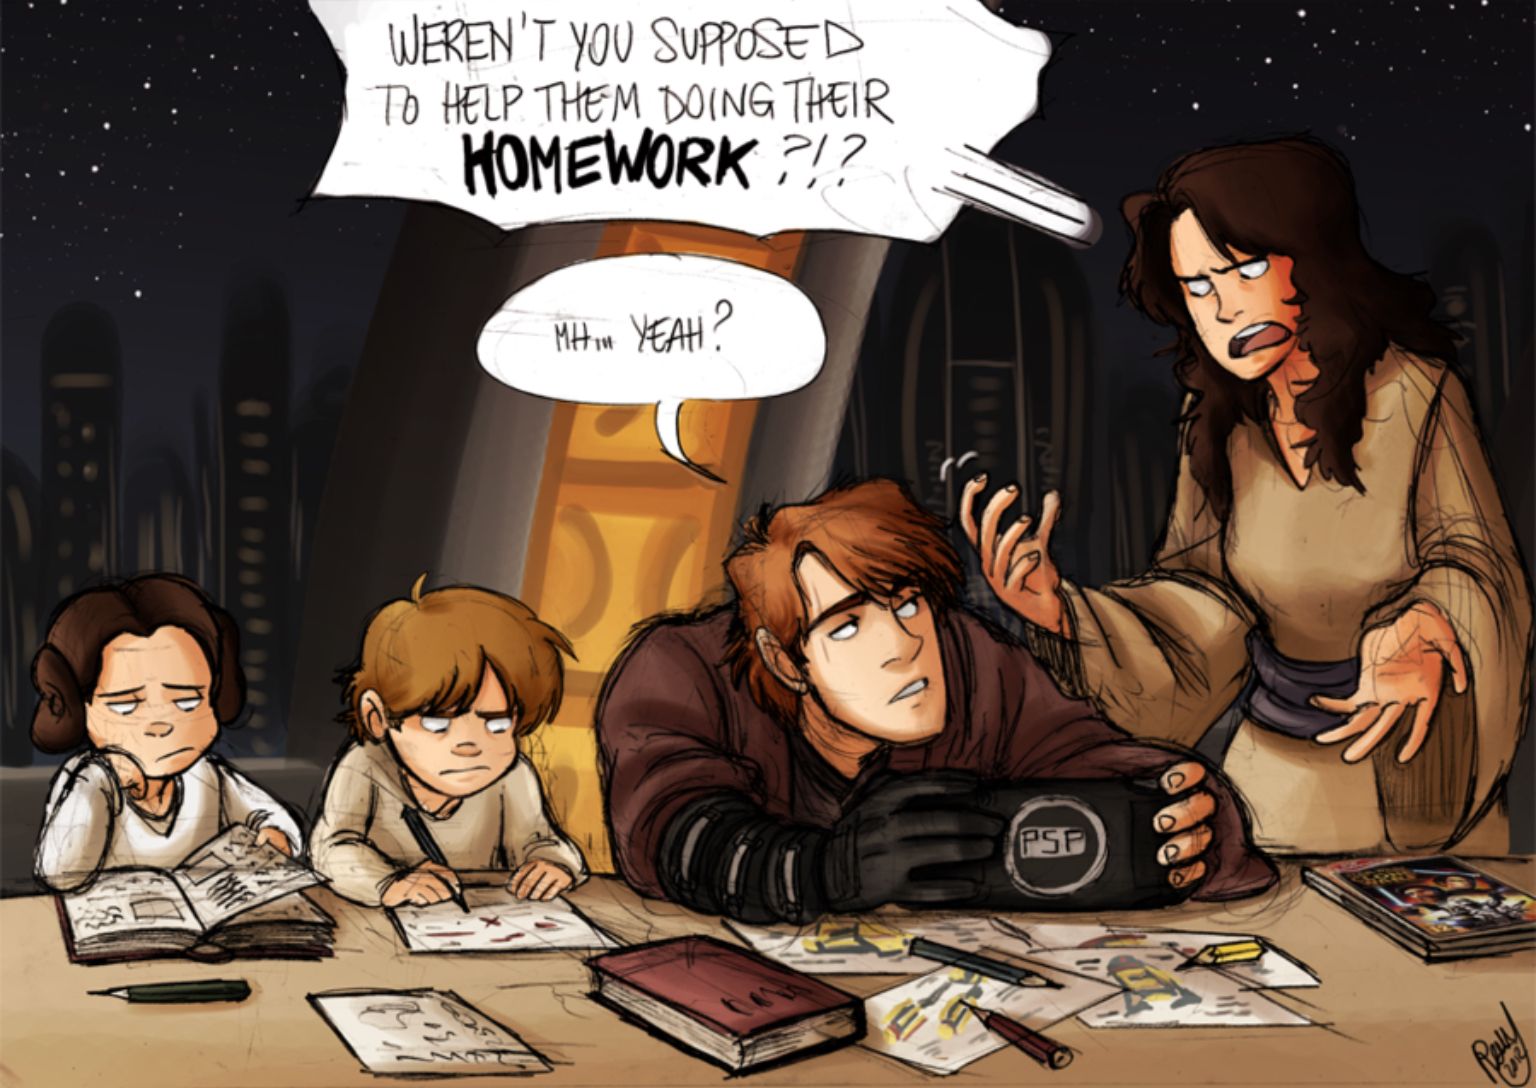 Anakin Helping Luke and Leia with their Homework